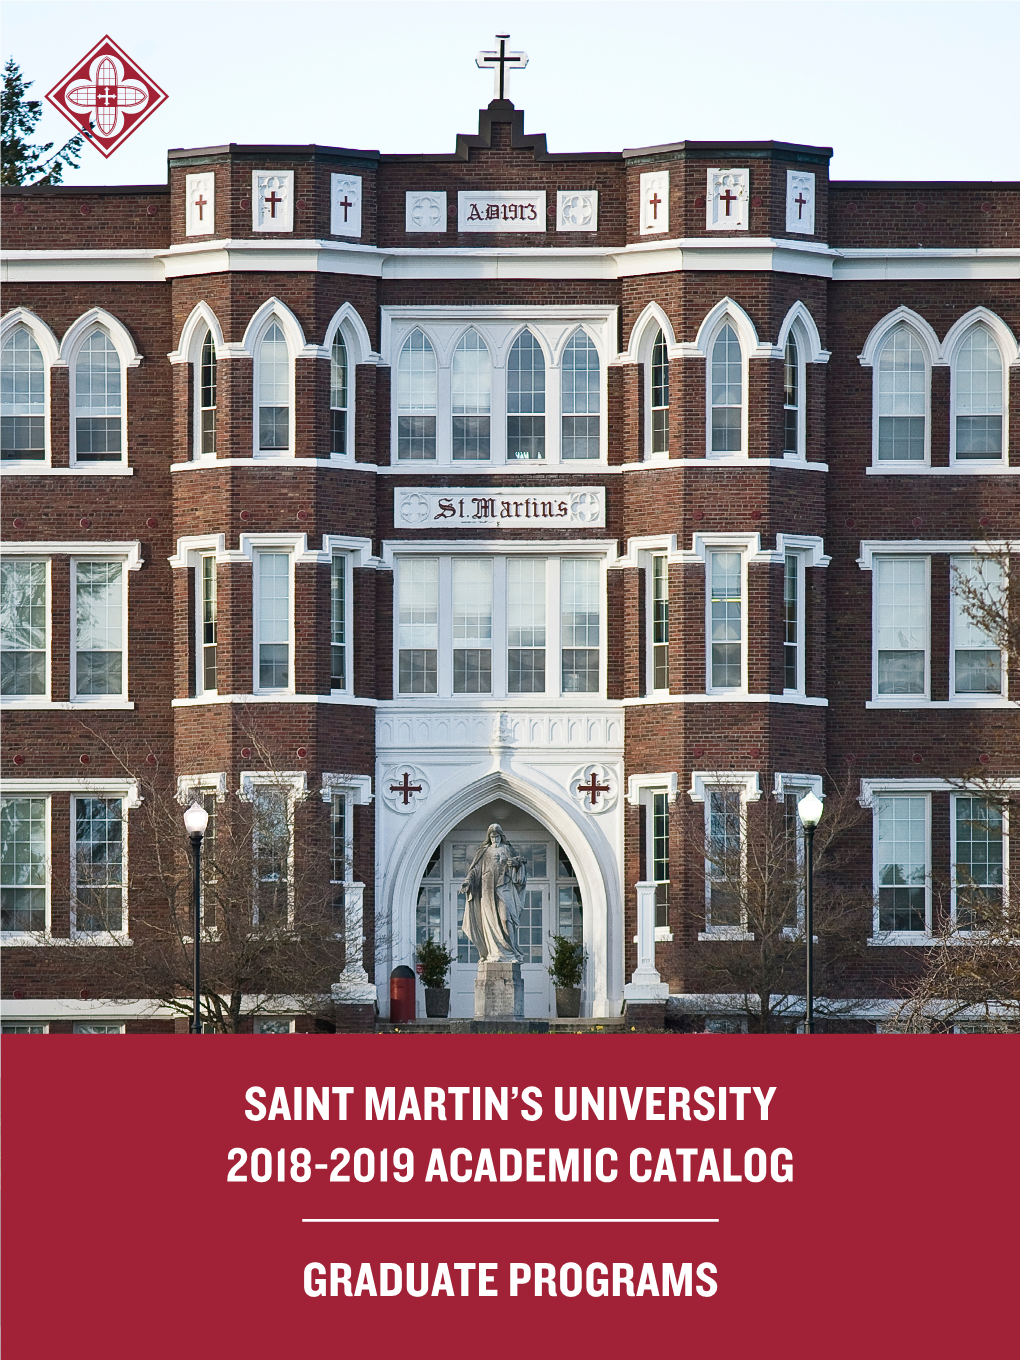 Saint Martin's University 2018-2019 Academic Catalog Graduate Programs